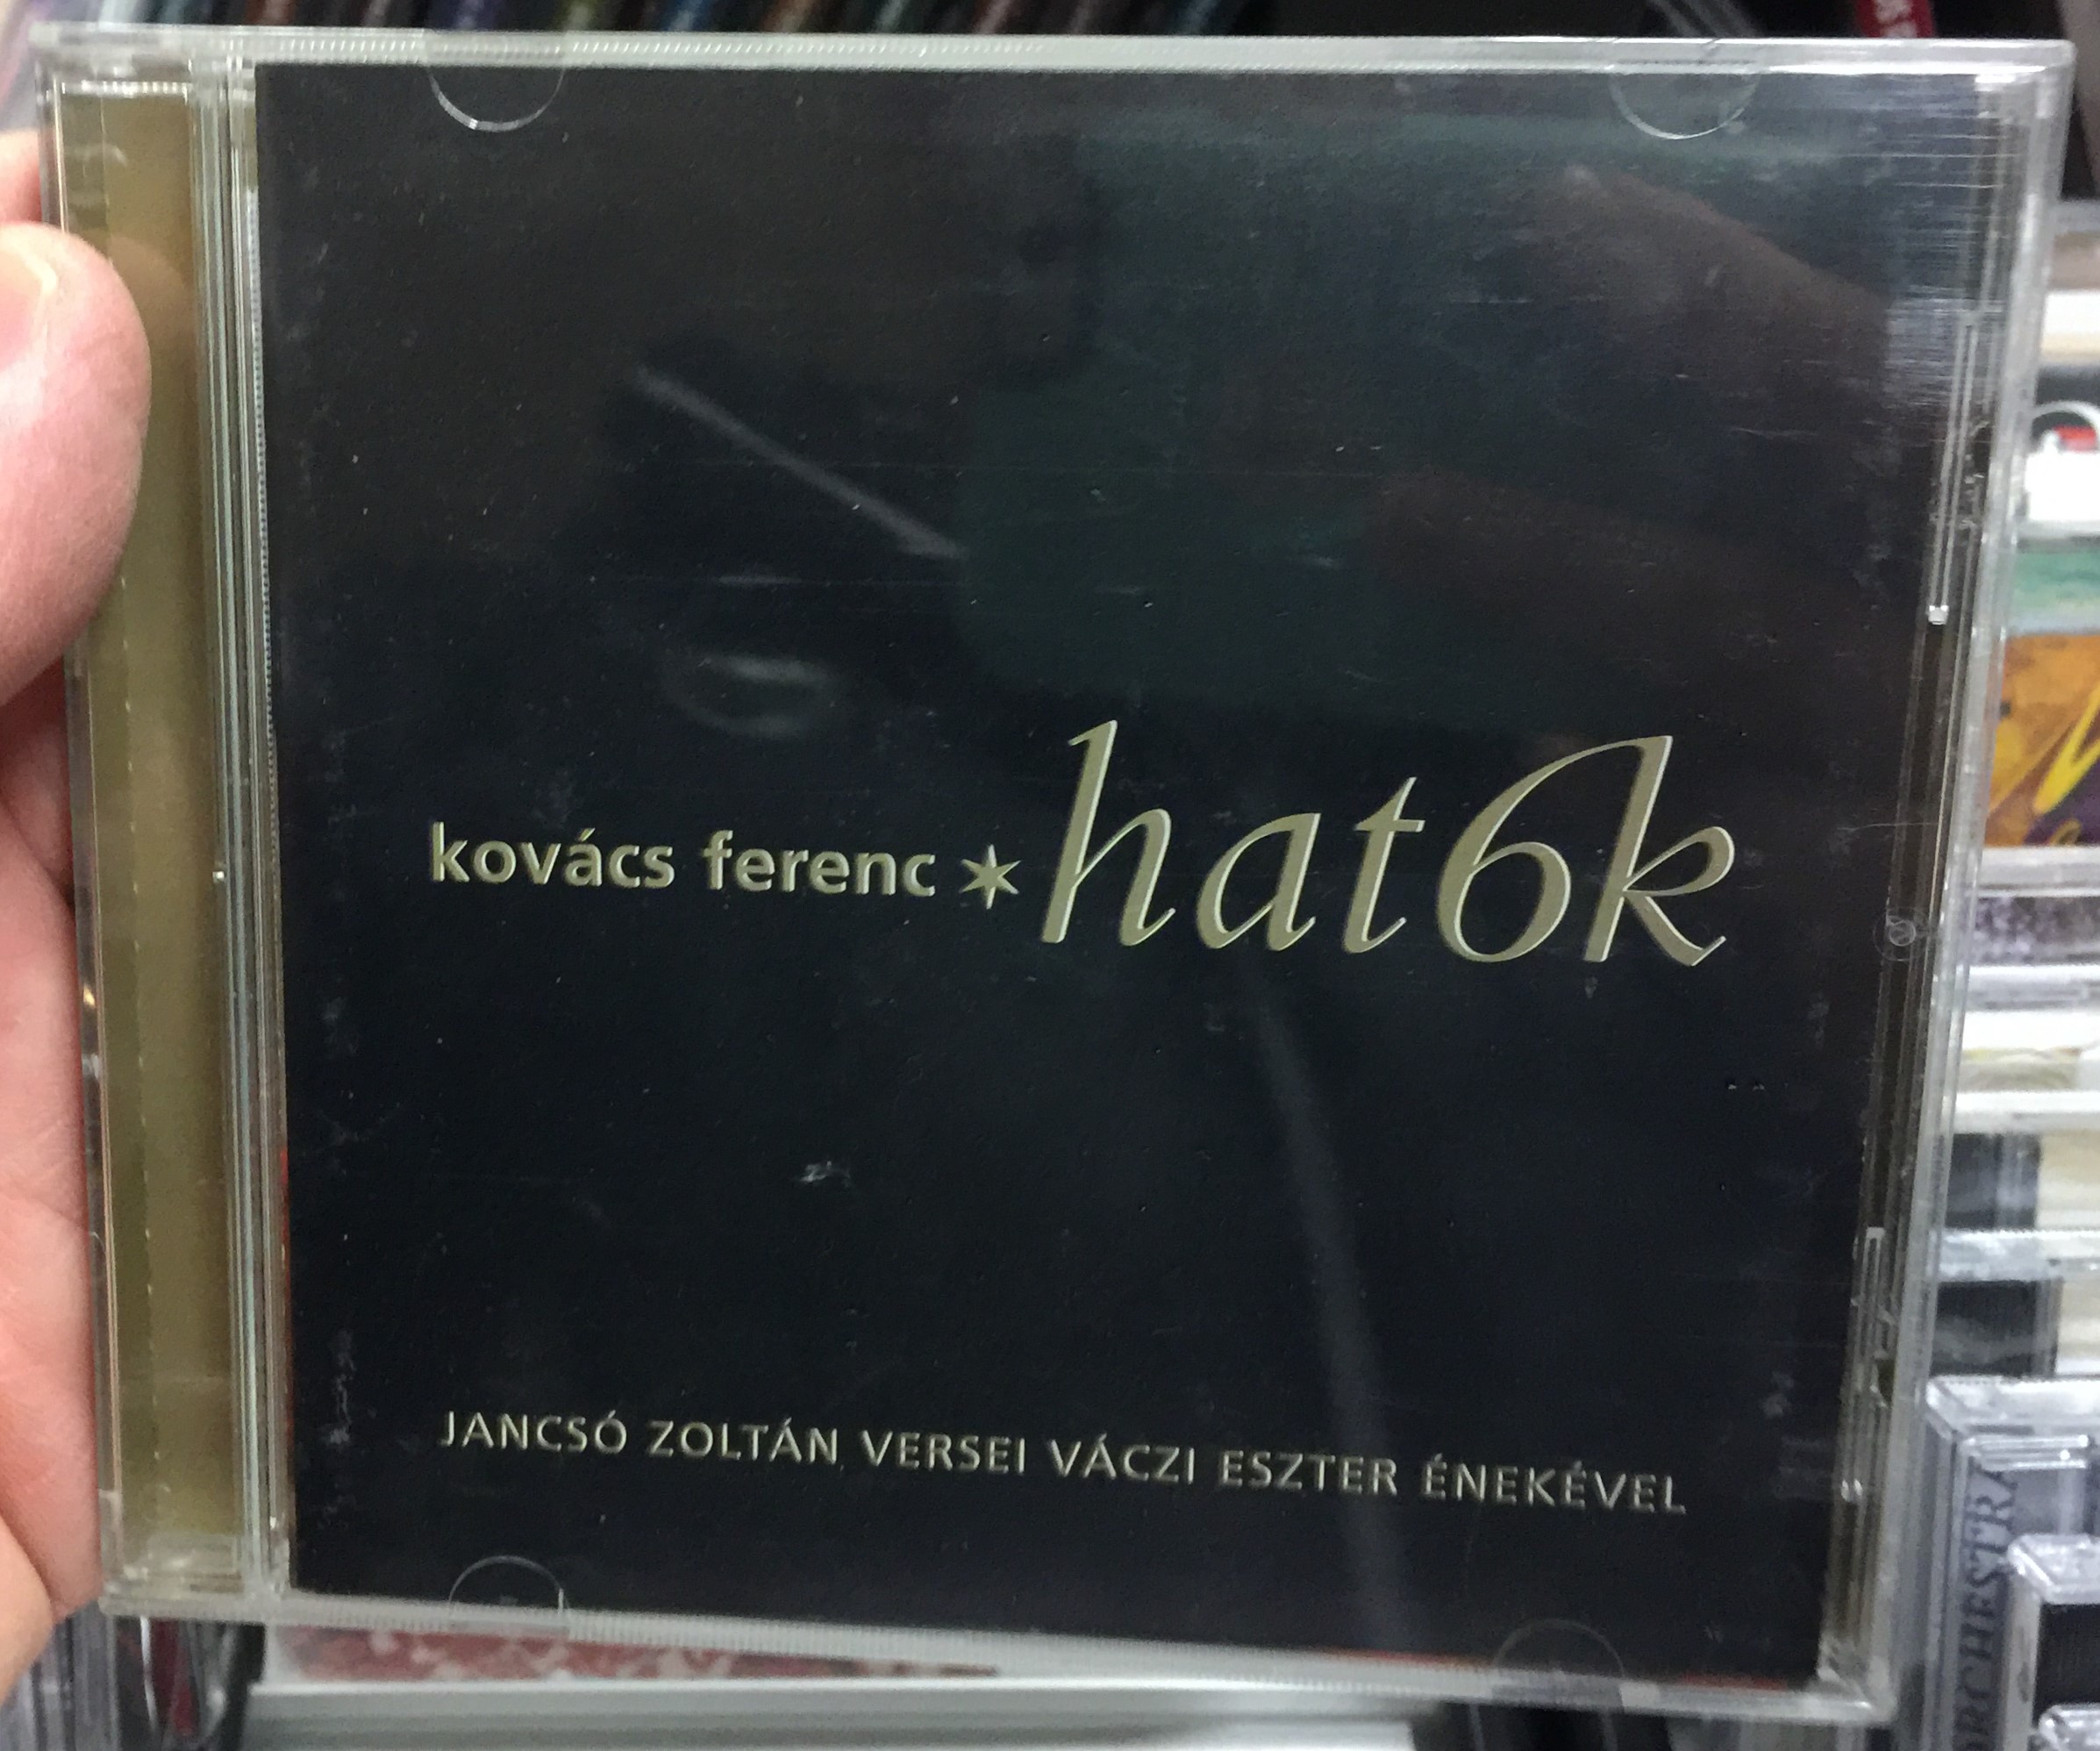 kov-cs-ferenc-hat6k-gramy-records-audio-cd-2006-gr-064-1-.jpg